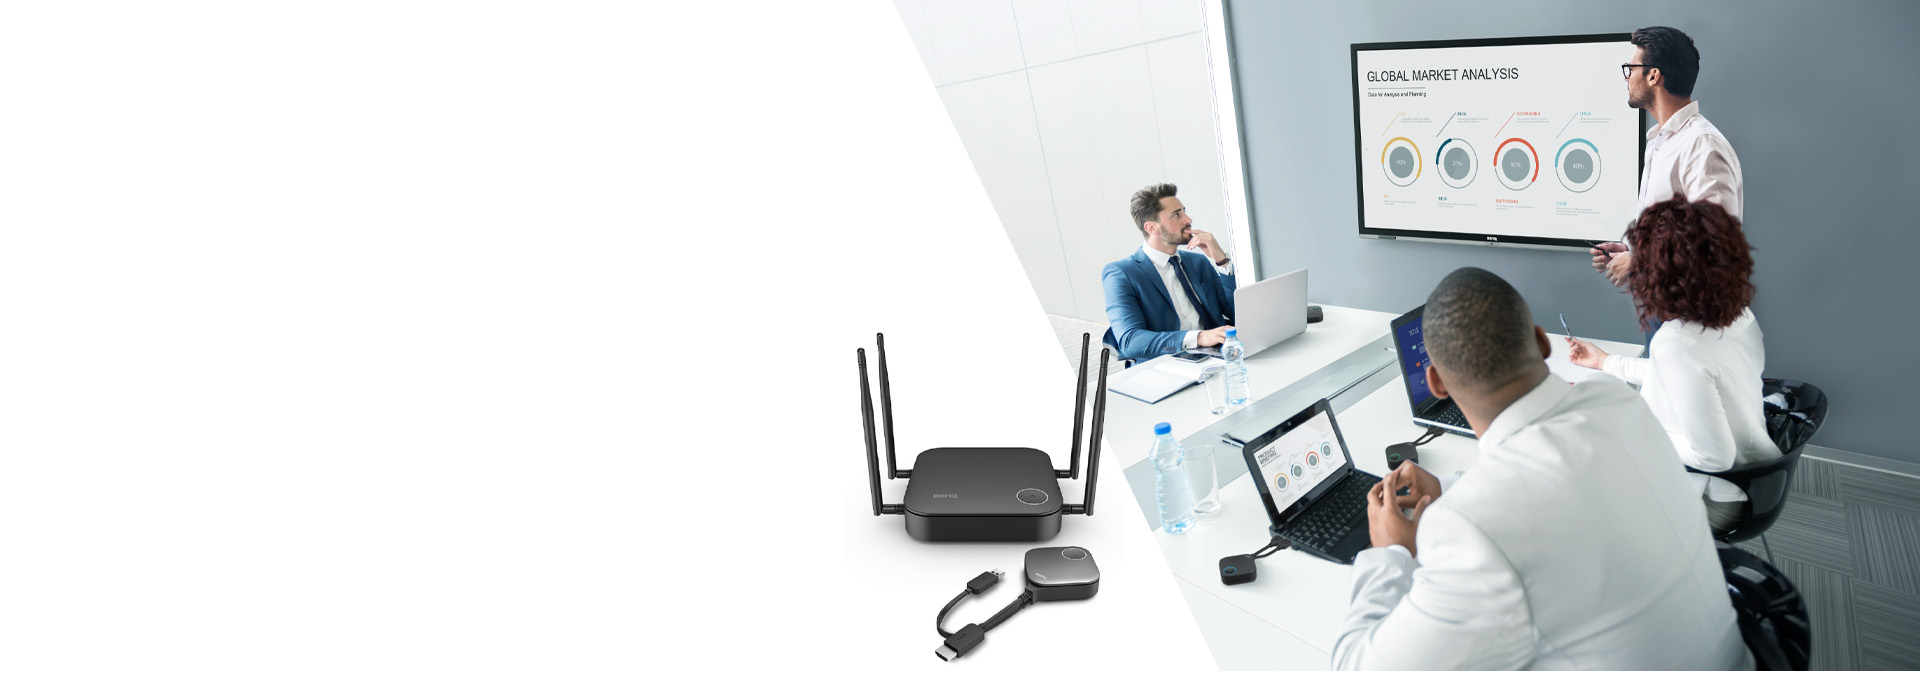 wireless presentation system benq